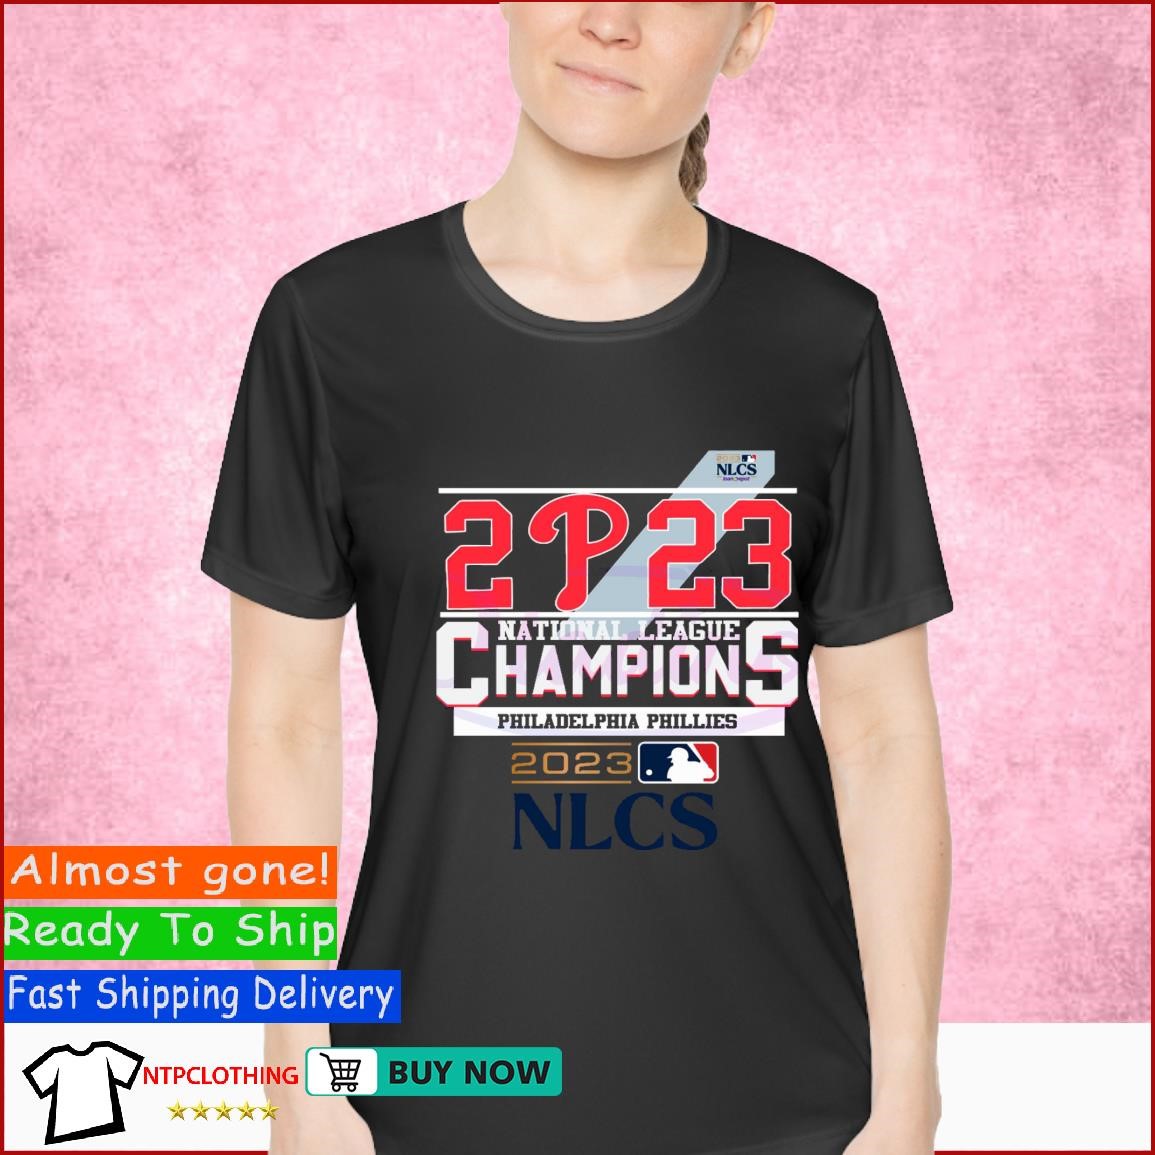 phillies national league champions shirt